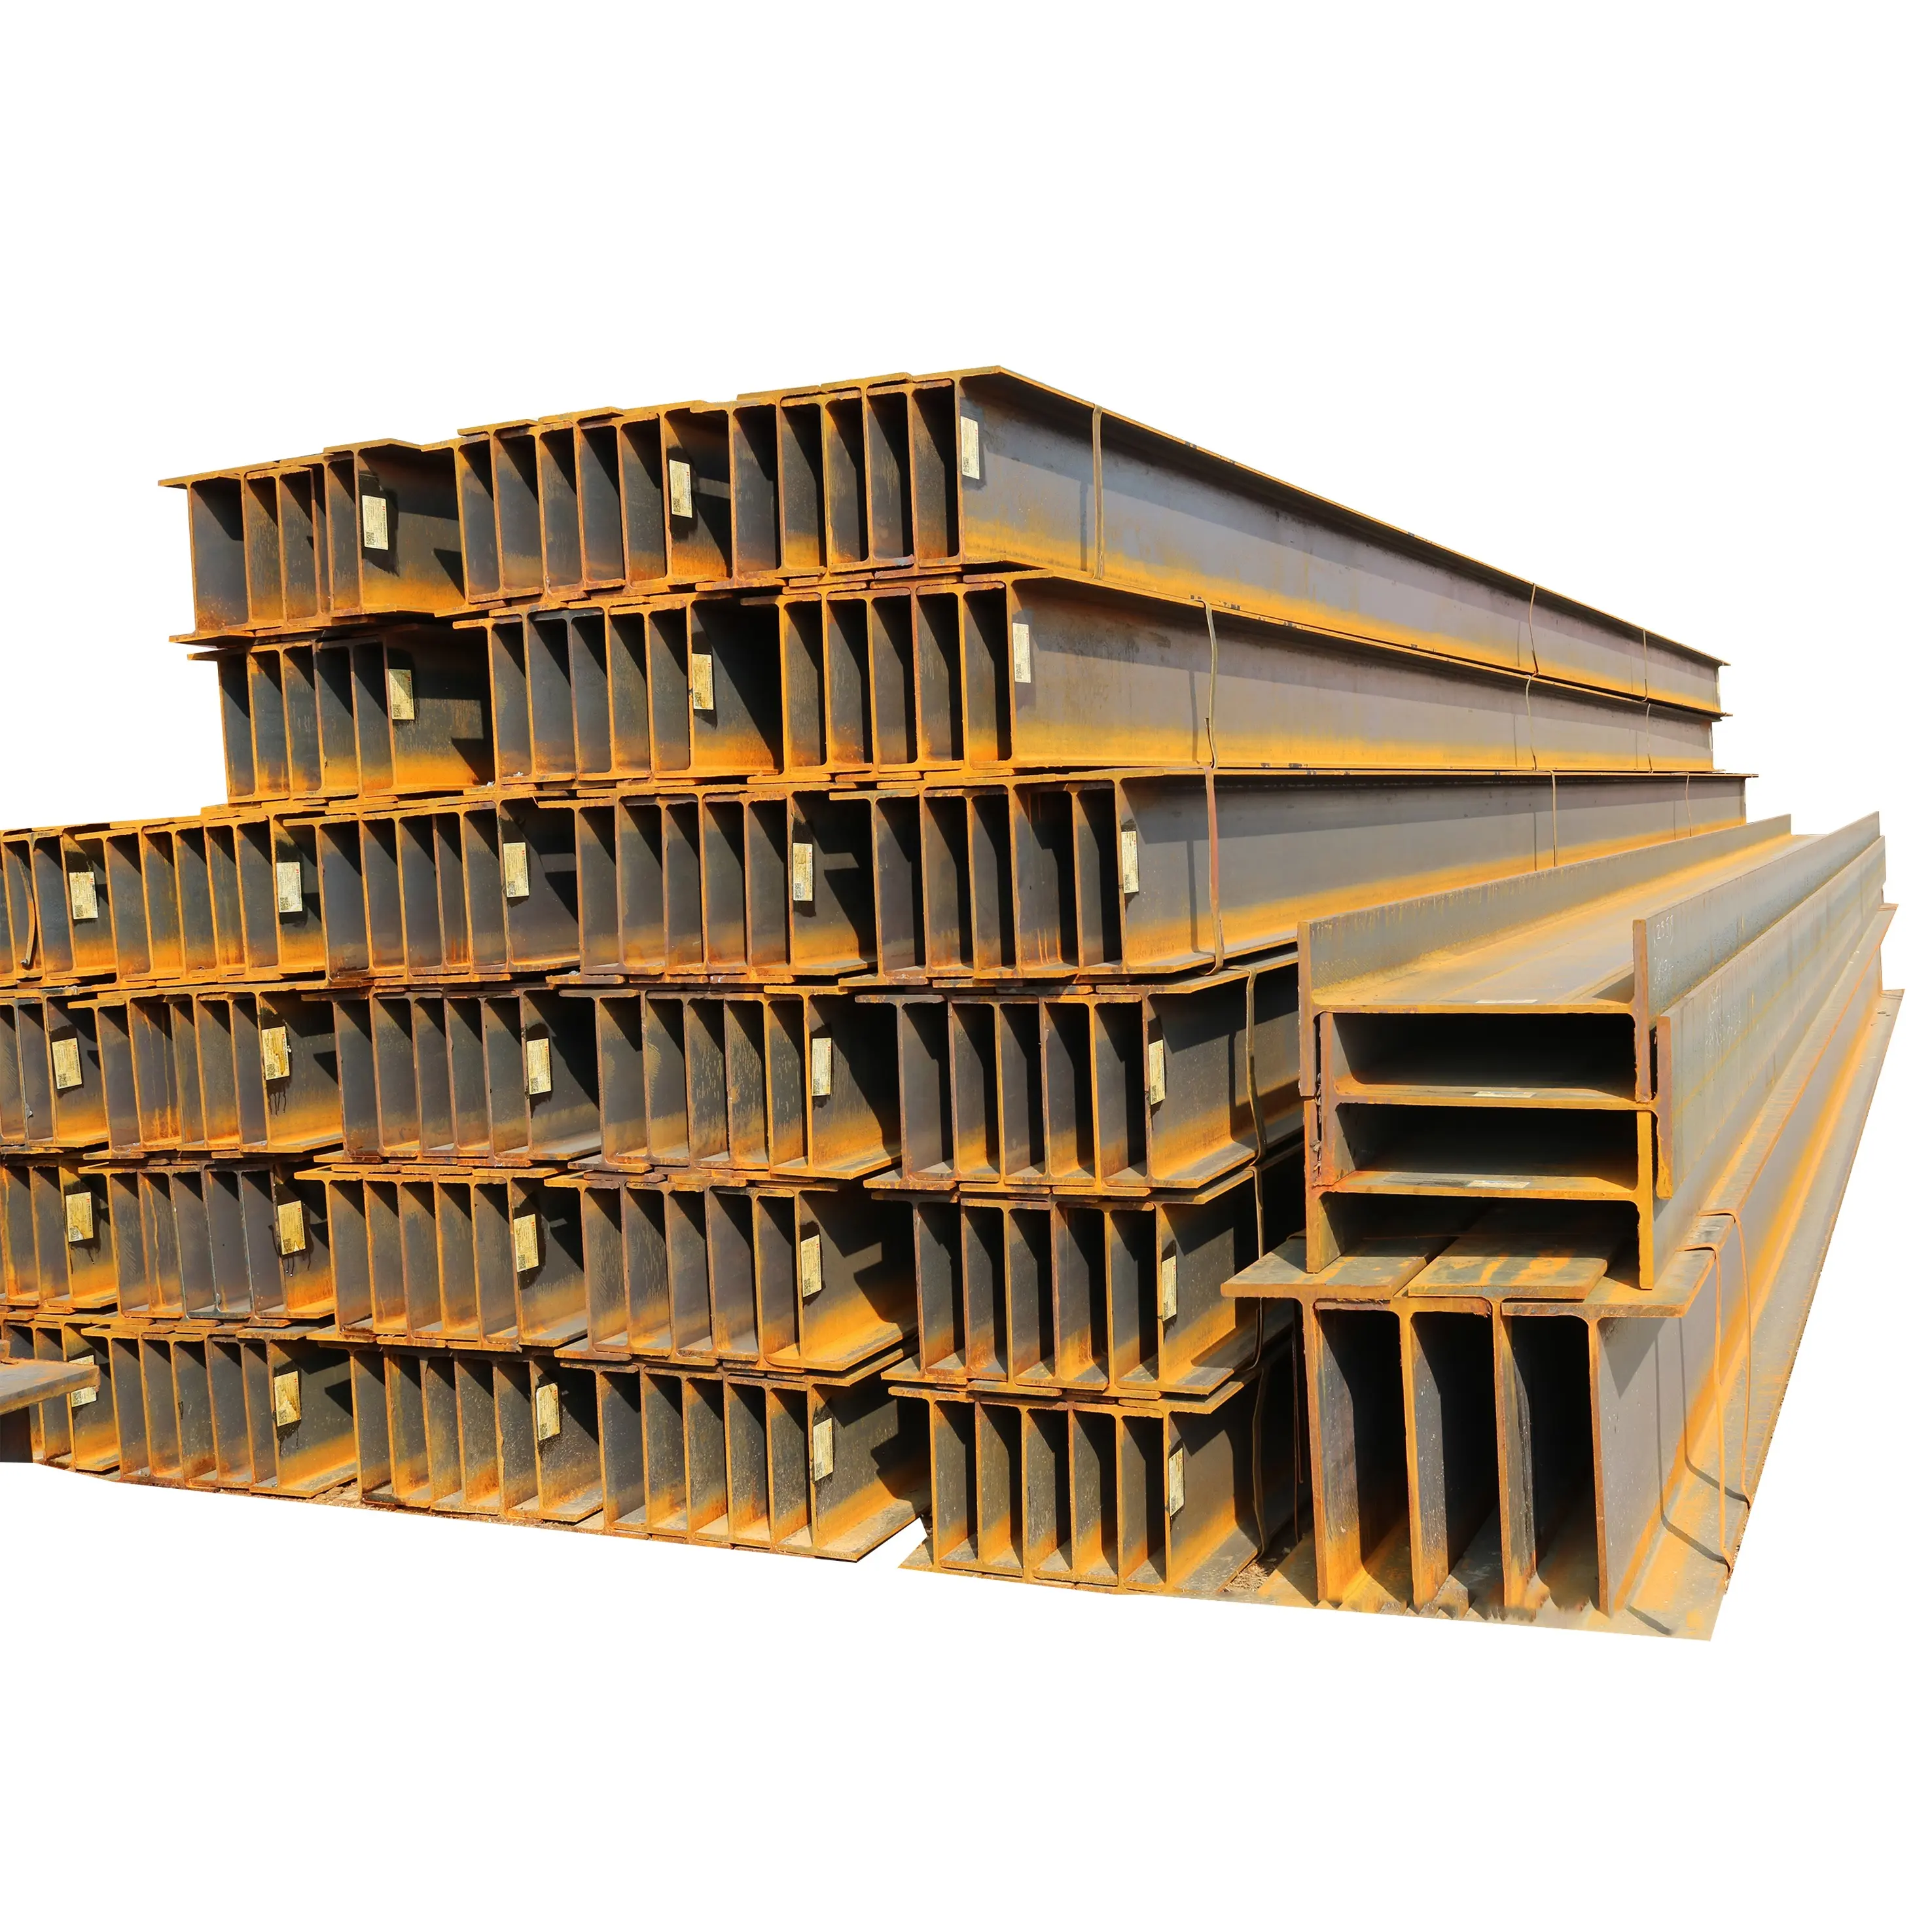 150x150熱間圧延鋼hビームhビーム鉄骨構造倉庫設計および建設用